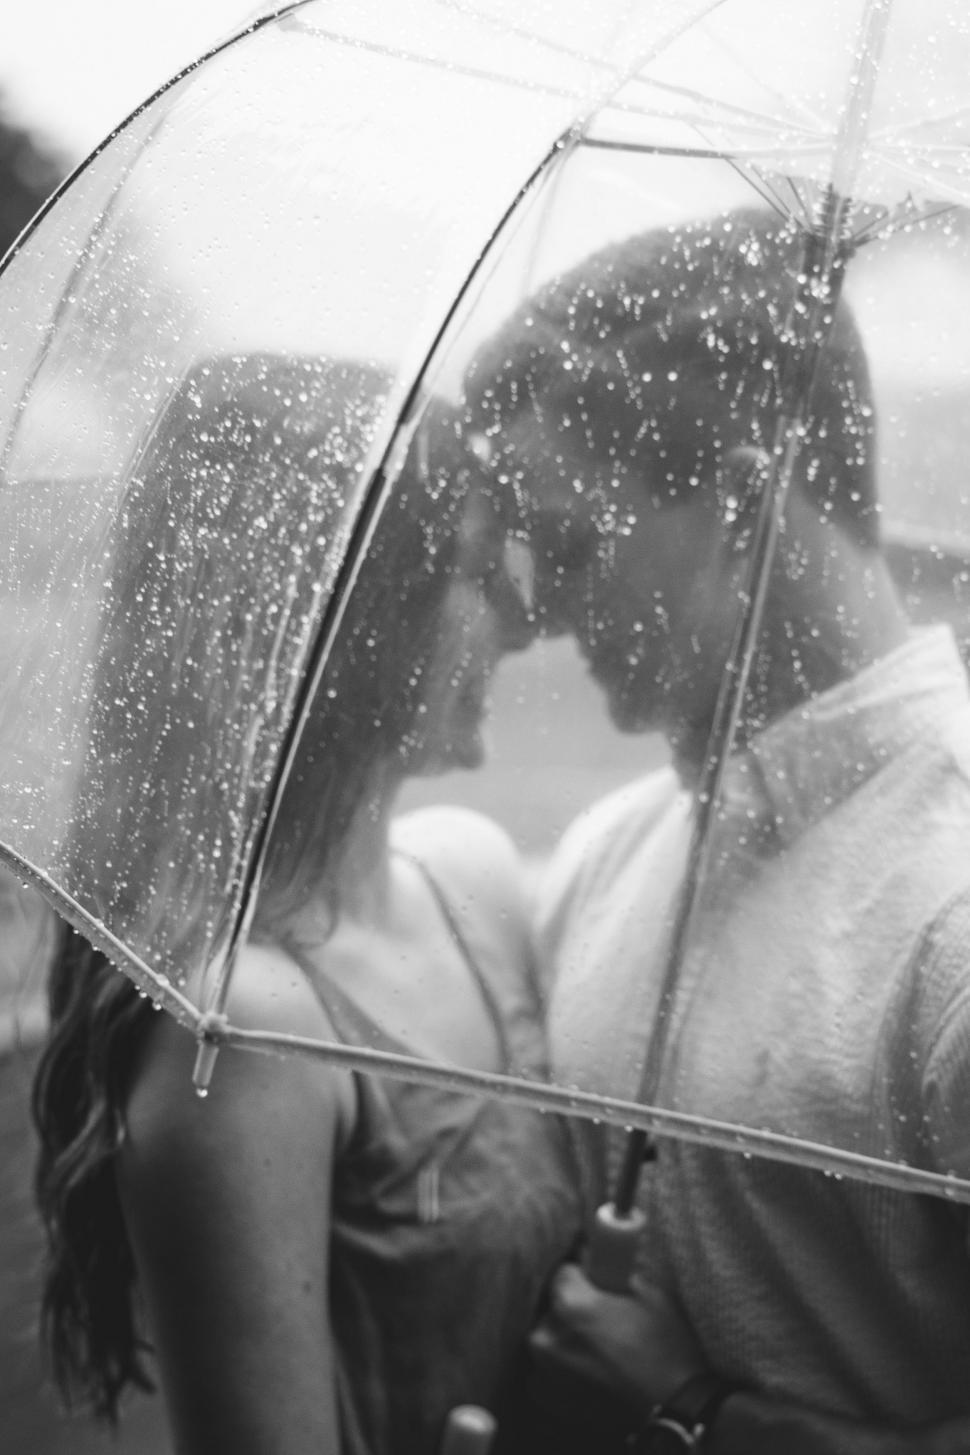 Free Image of Man and Woman Kissing Under Umbrella 